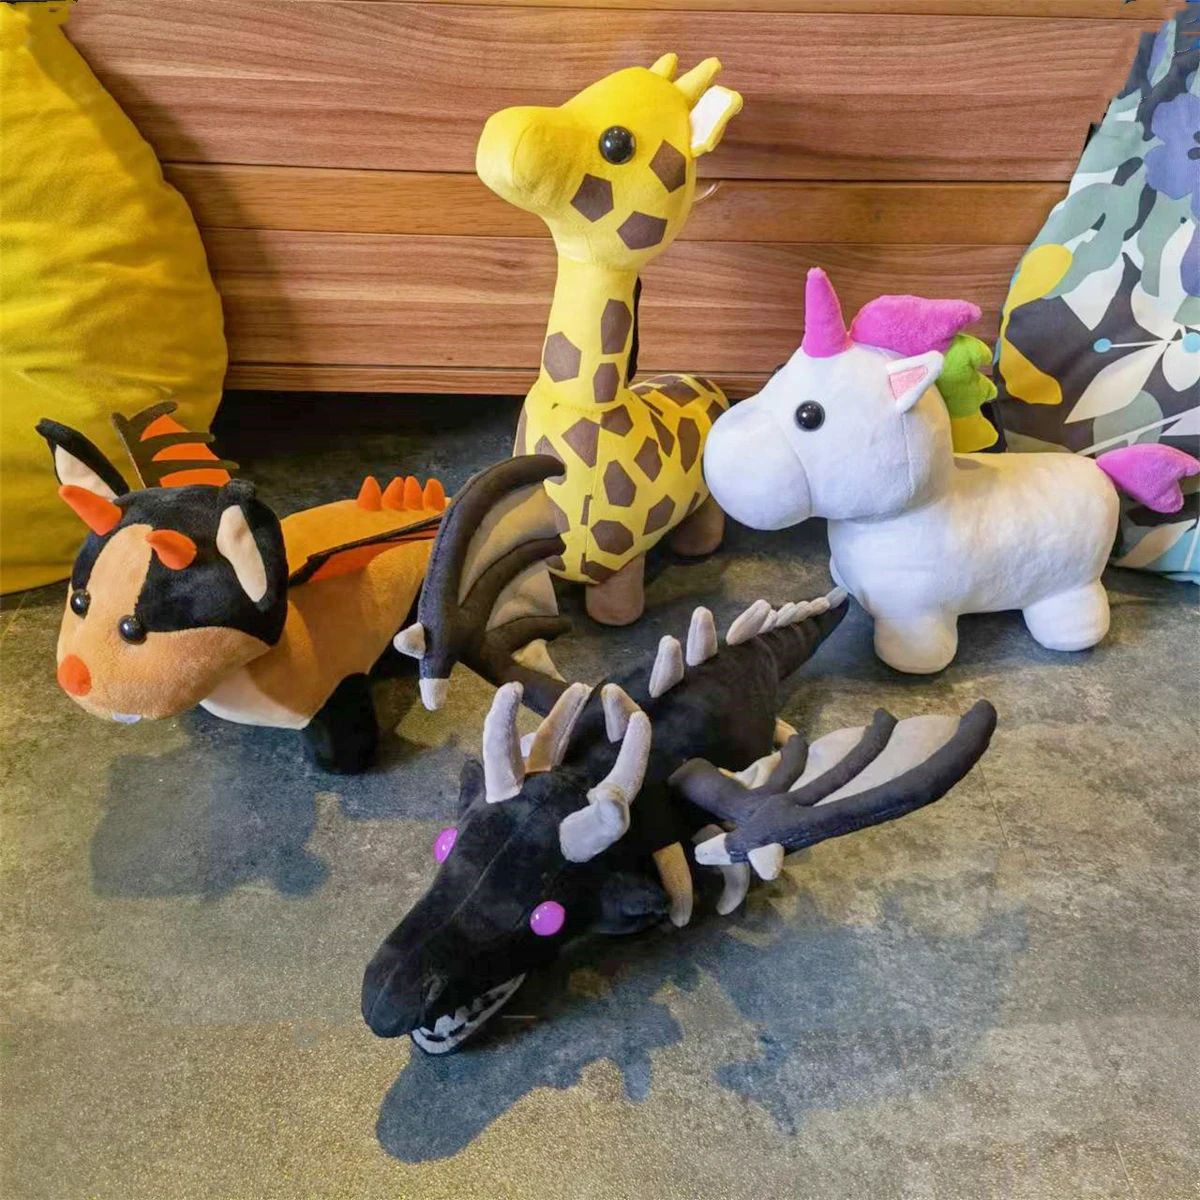 Adopt Me Pets Bat Dragon Shadow Dragon Giraffe Adopt Me Pets Evil Unicorn Plush Toys Plushies Action Figures Cute Stuffed Dolls